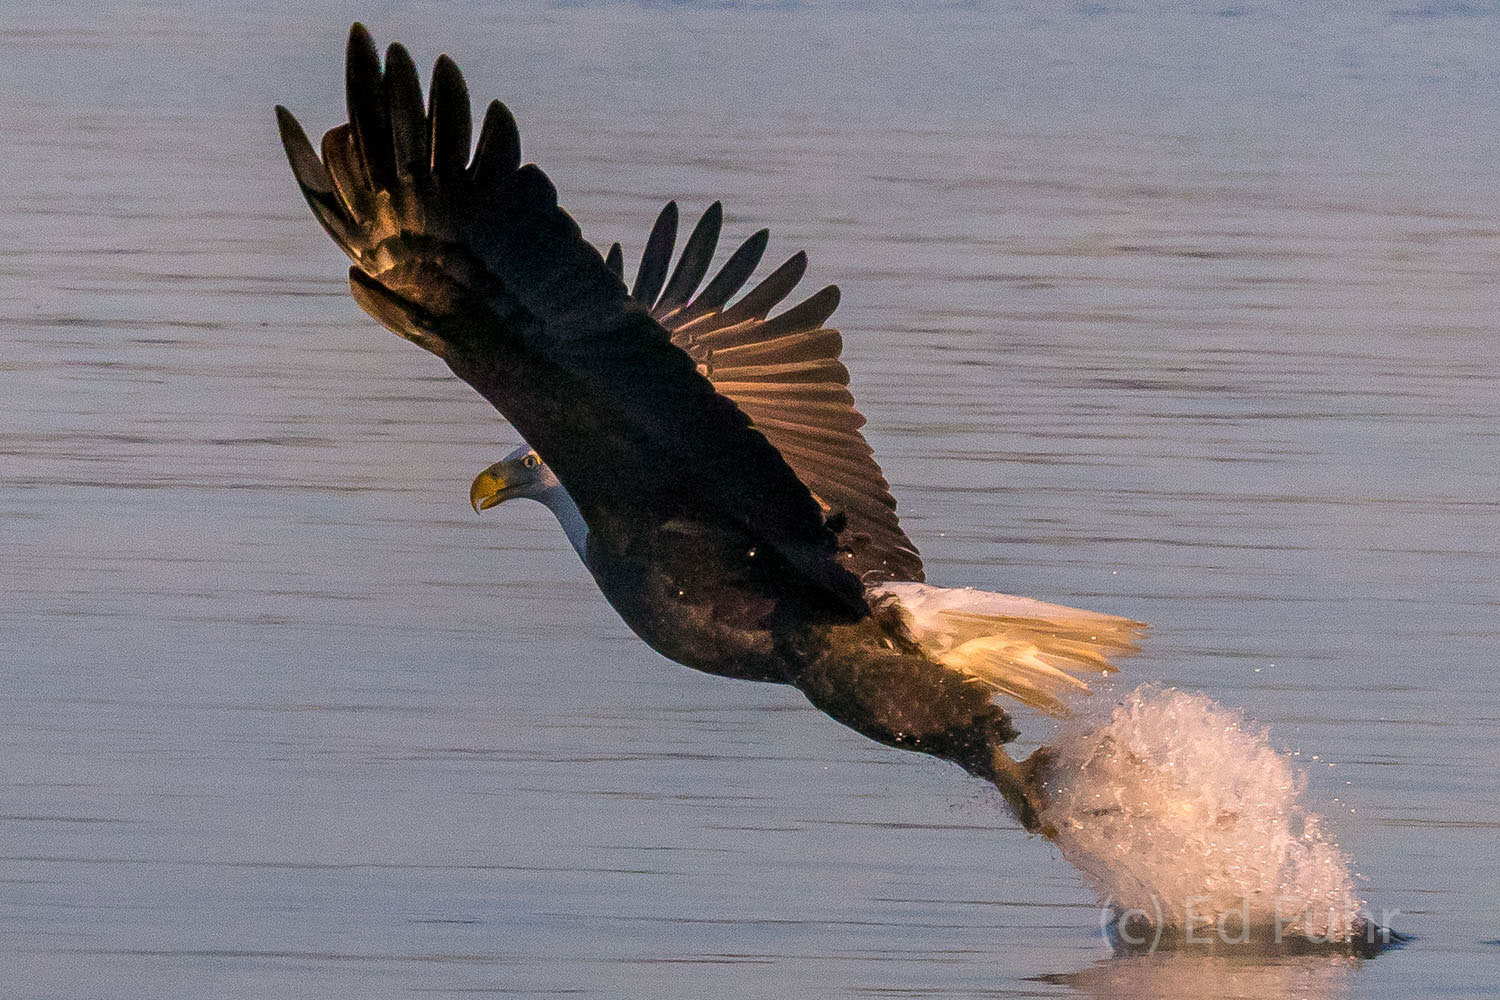 A bald eagle rises after a successful strike.